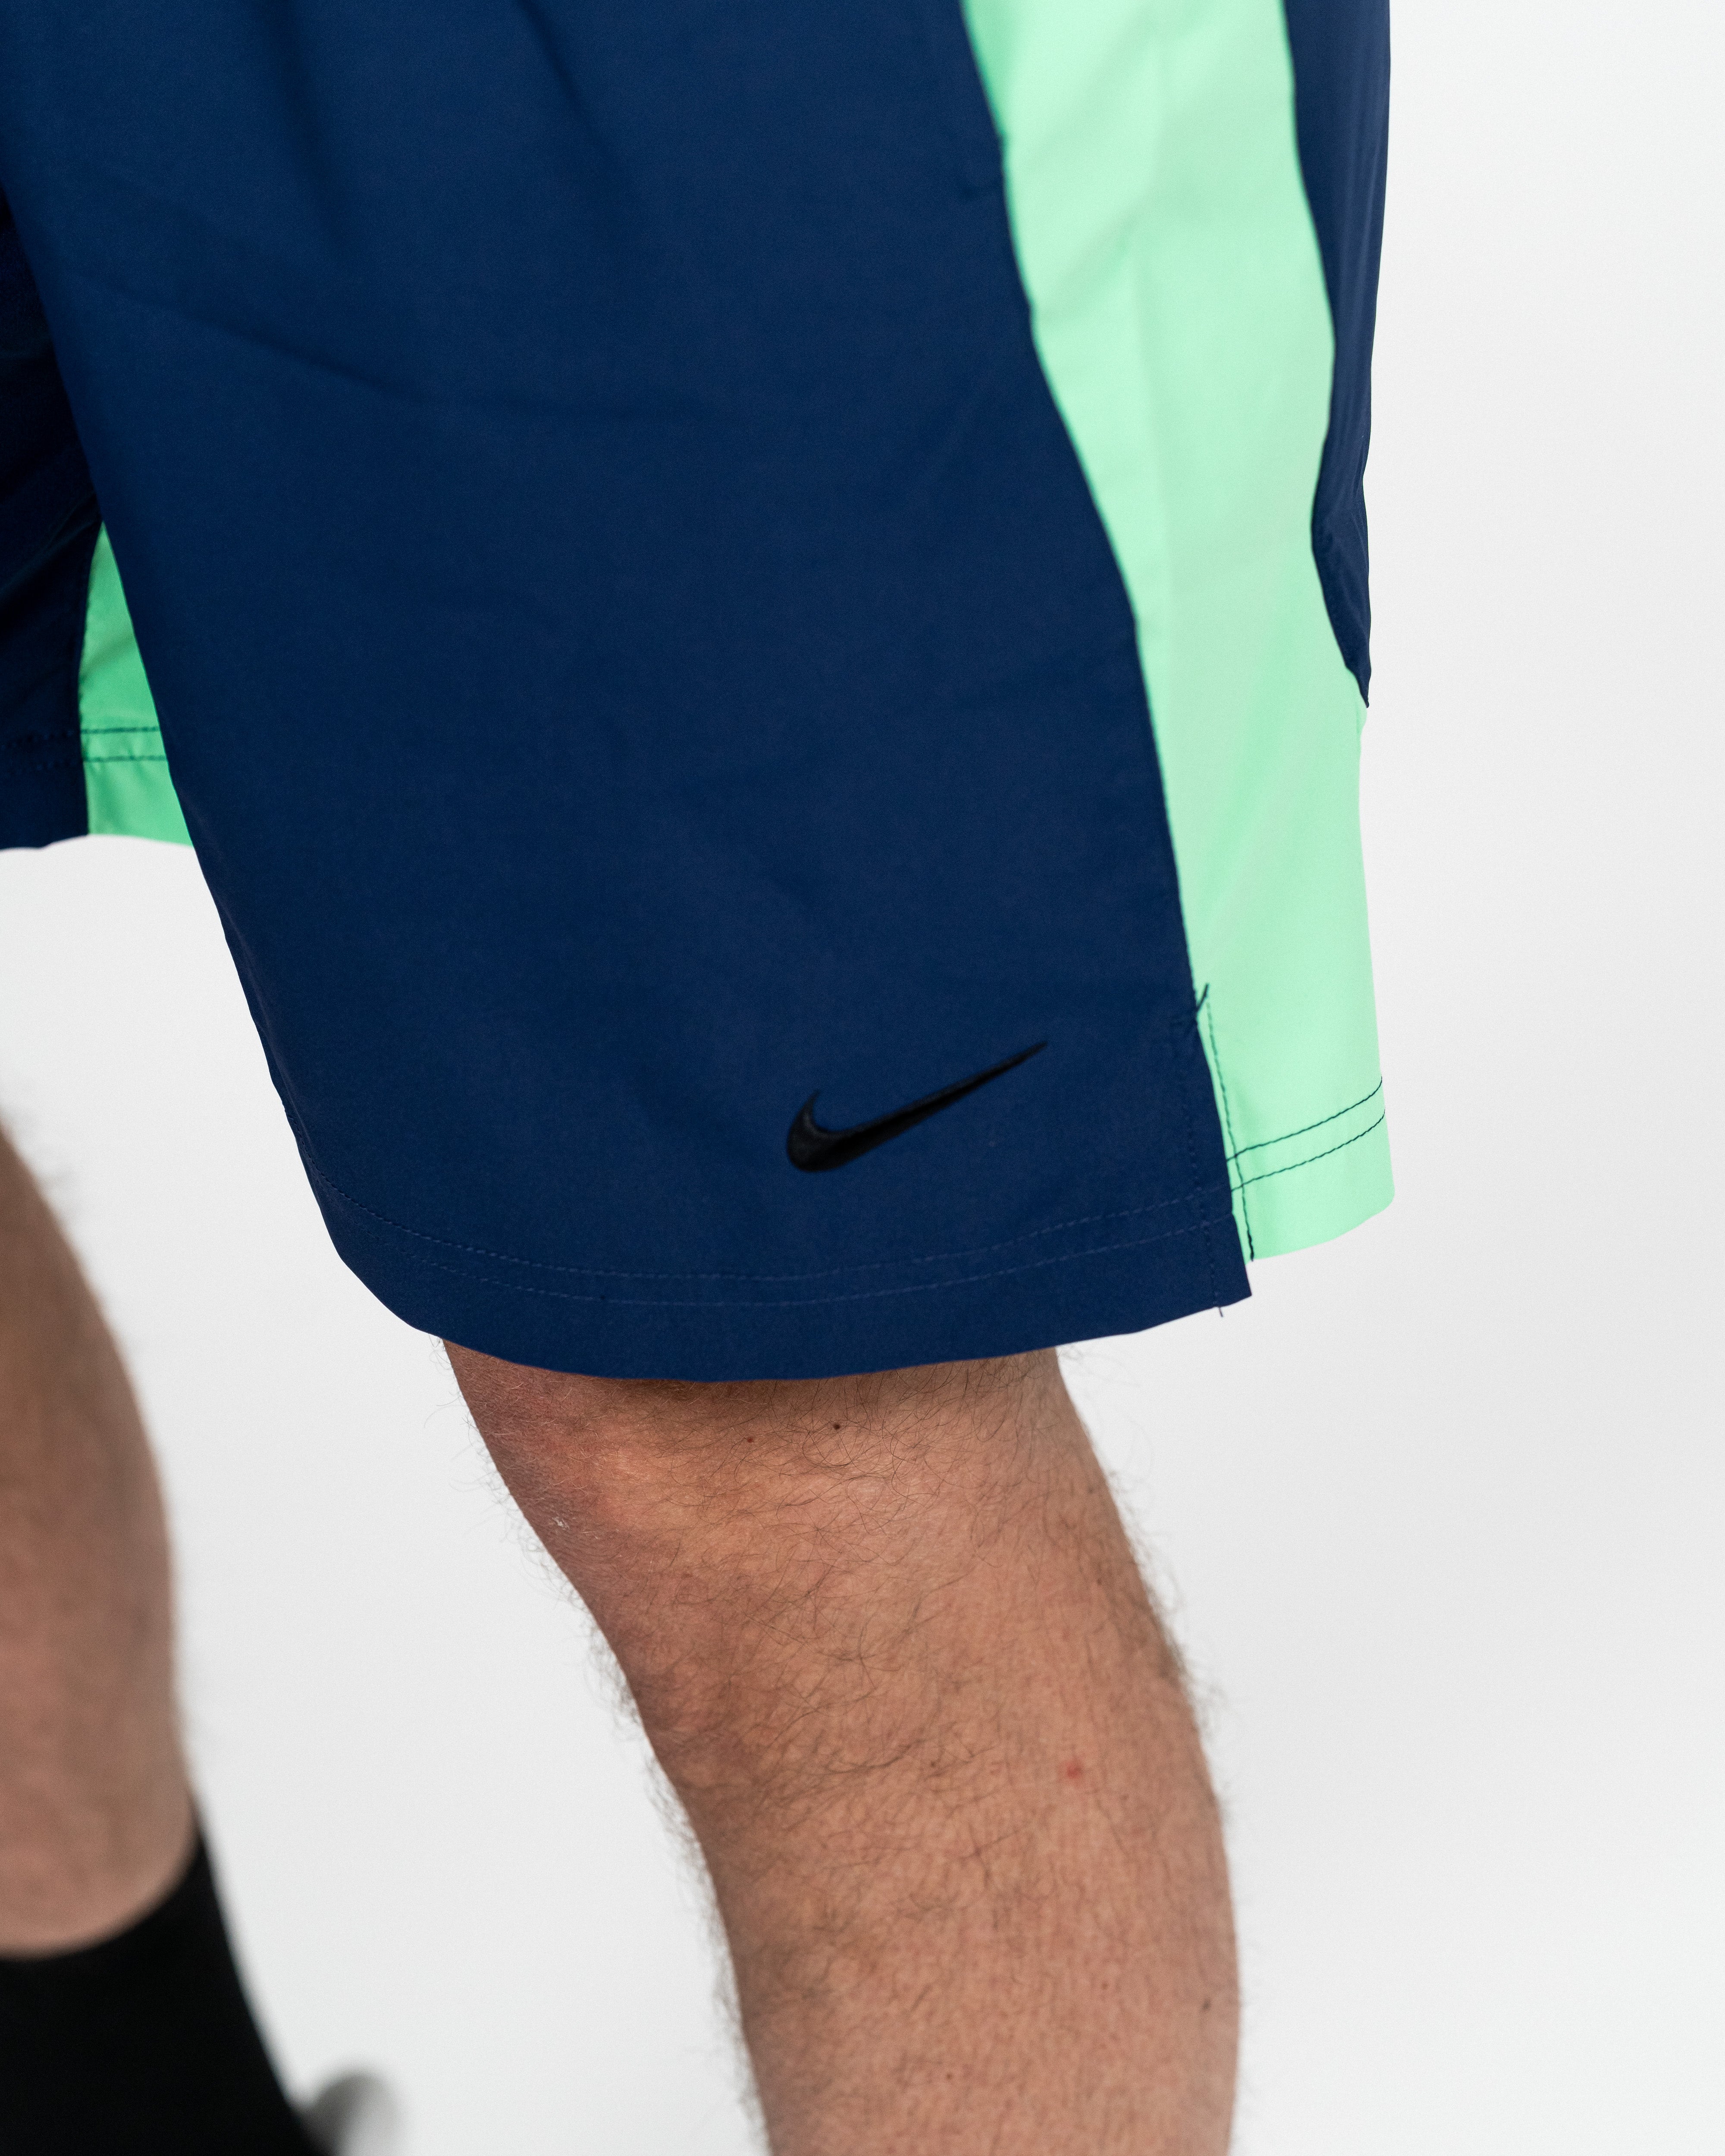 Nike Herre Flx Shorts Woven